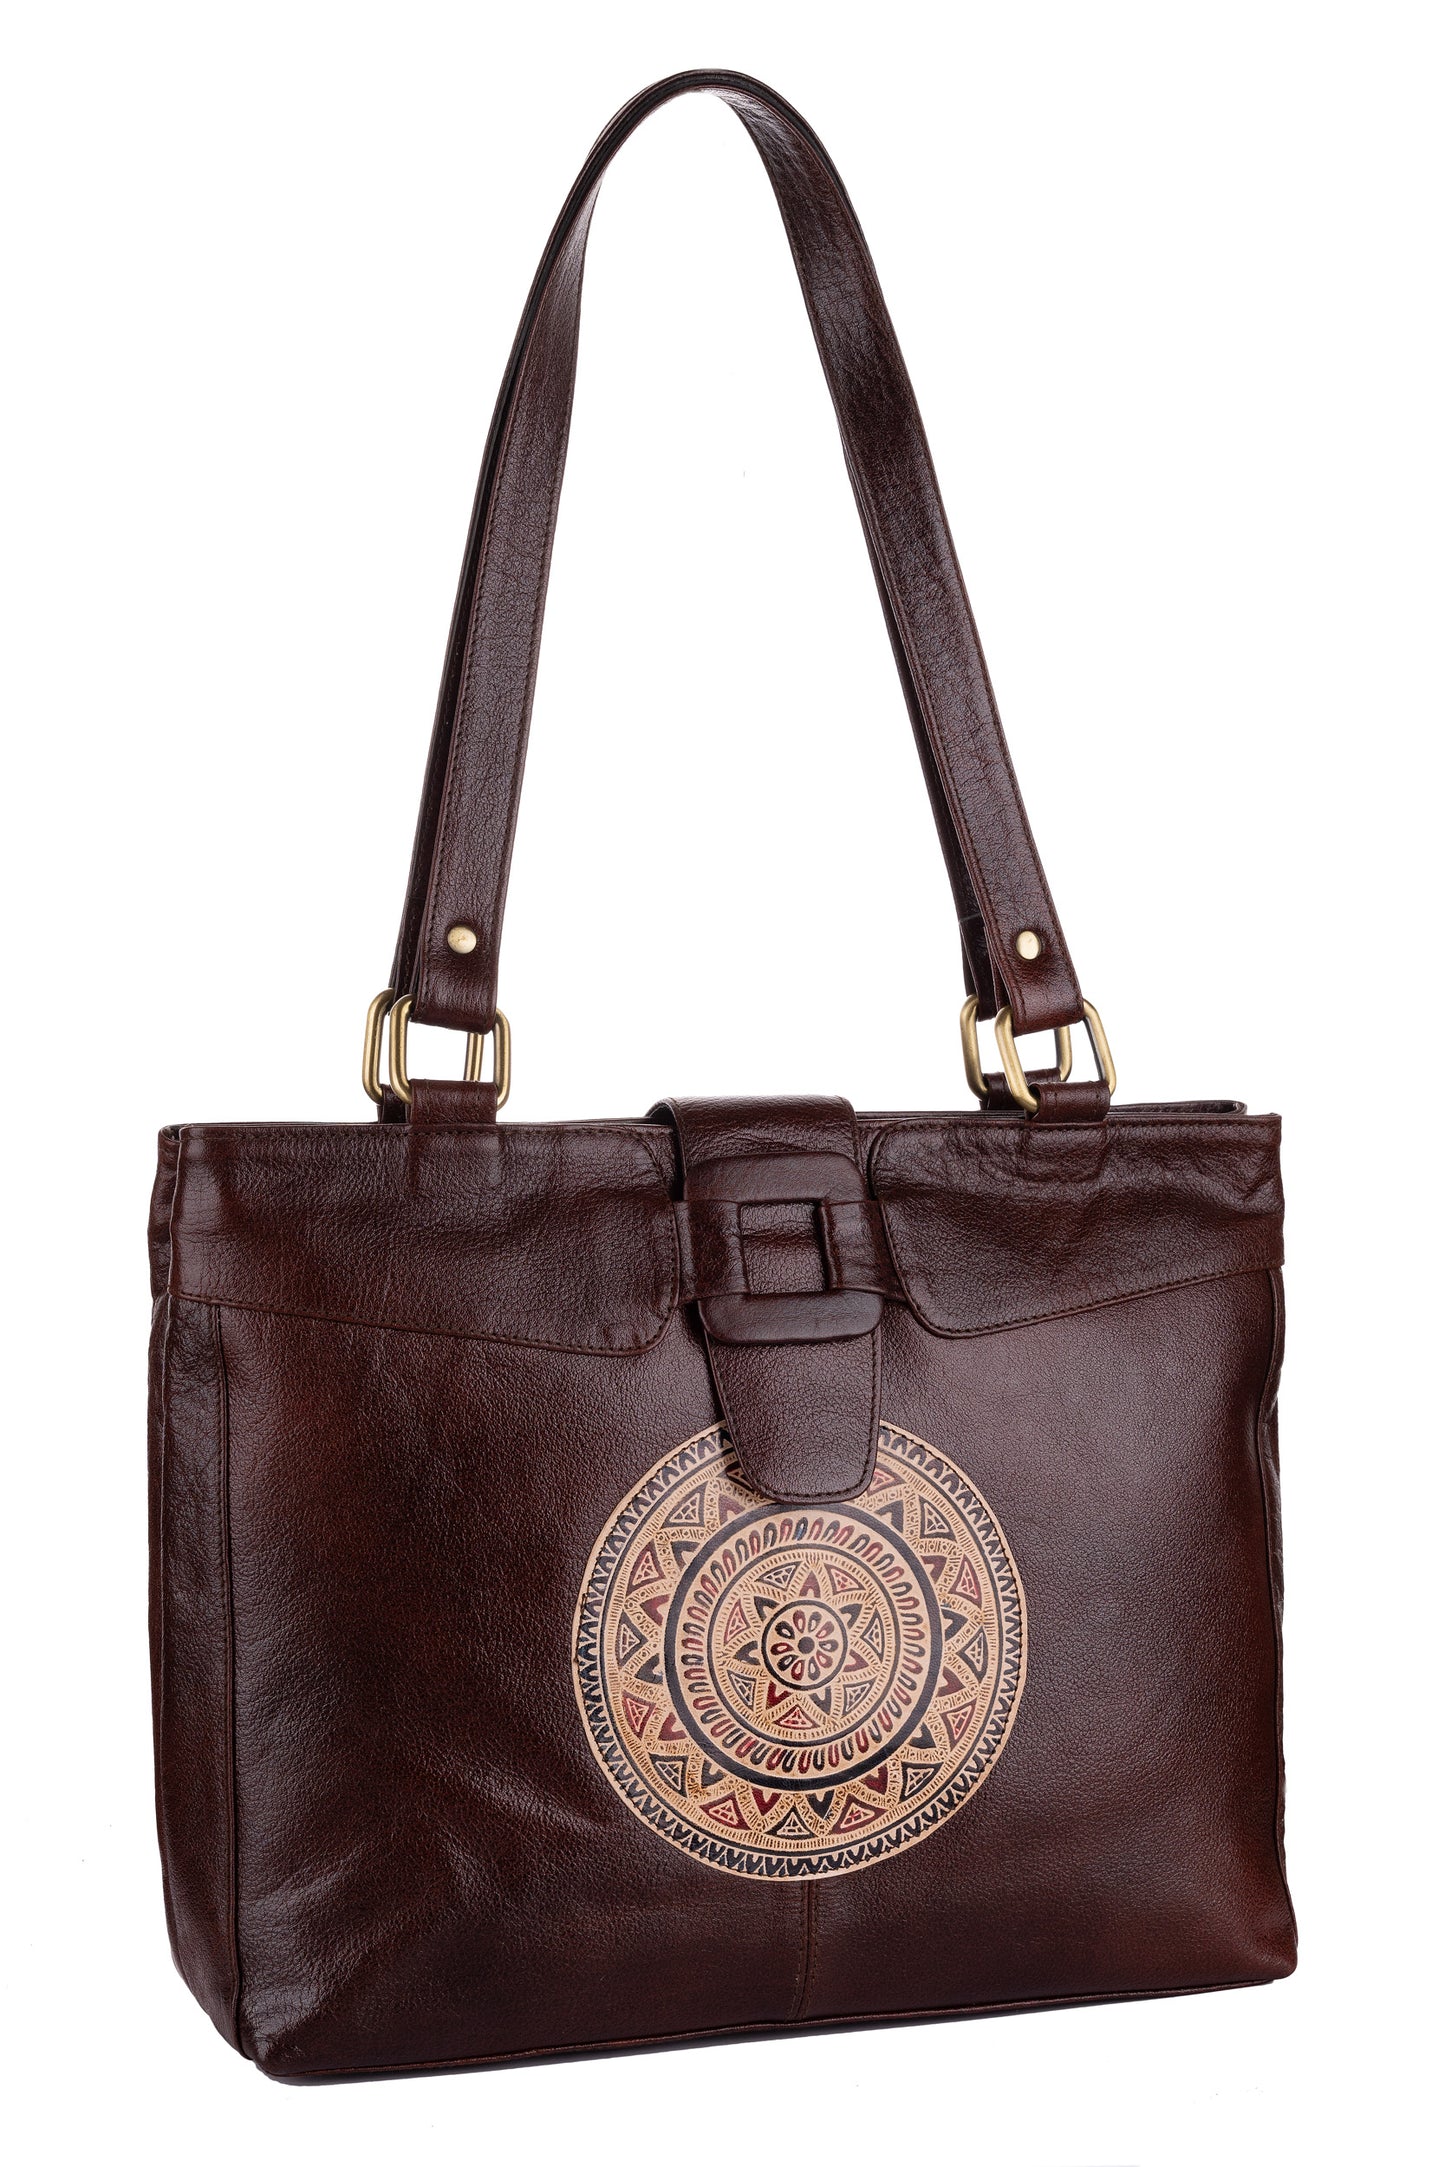 Shantiniketan Leather Traditional Motif Printed Brown Handbag (14*14) for Women